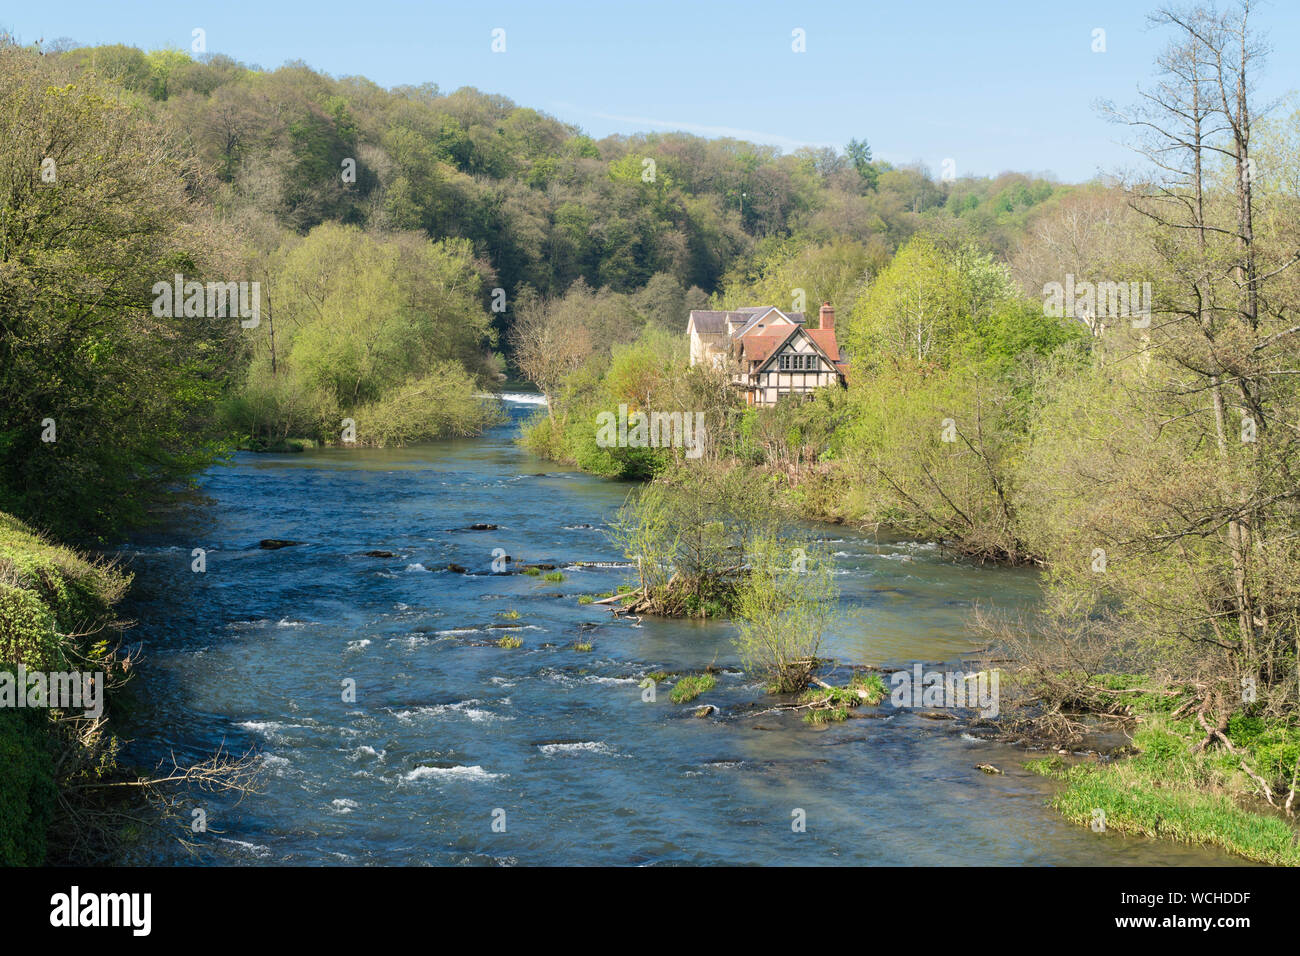 Timber framed Hotel im Wald am Ufer des Flusses Haus, Ludlow Großbritannien eingestellt. April 2019 Stockfoto